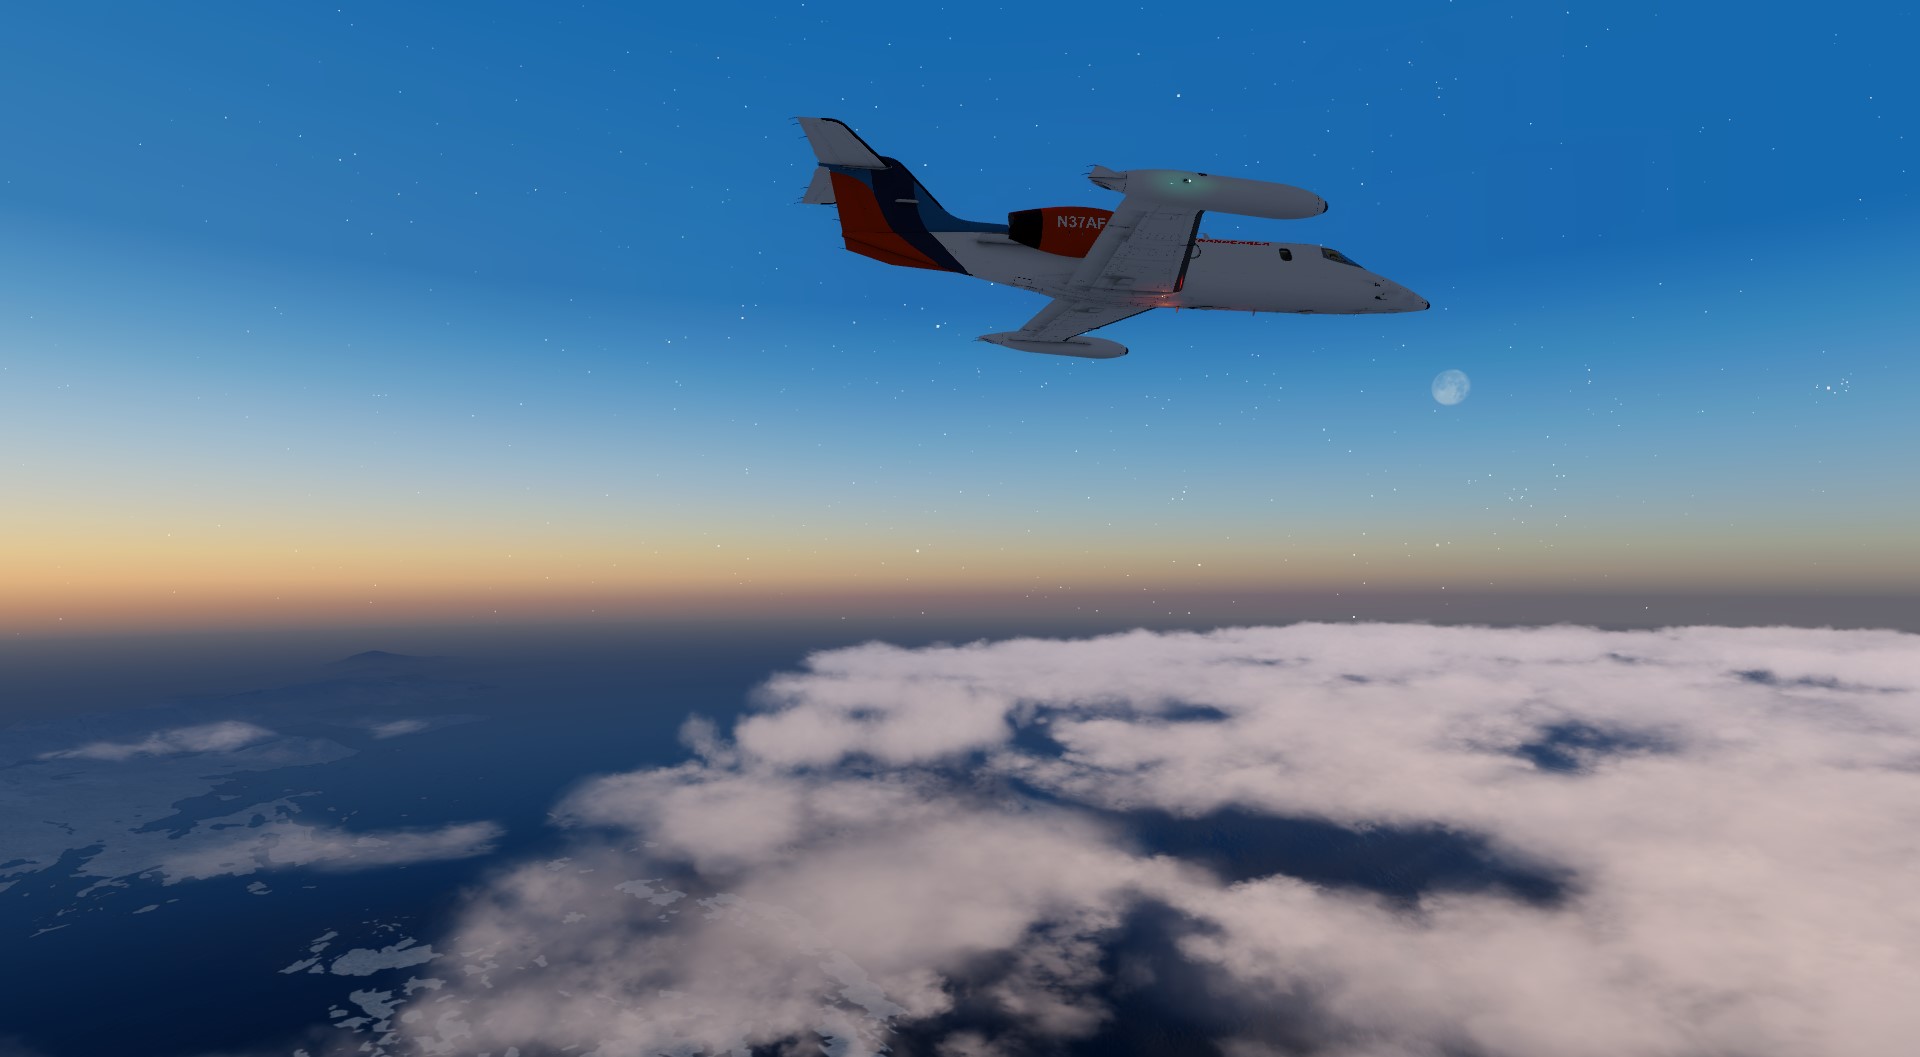 Flysimware – Learjet 35A 评测与冰岛送货之旅-5341 